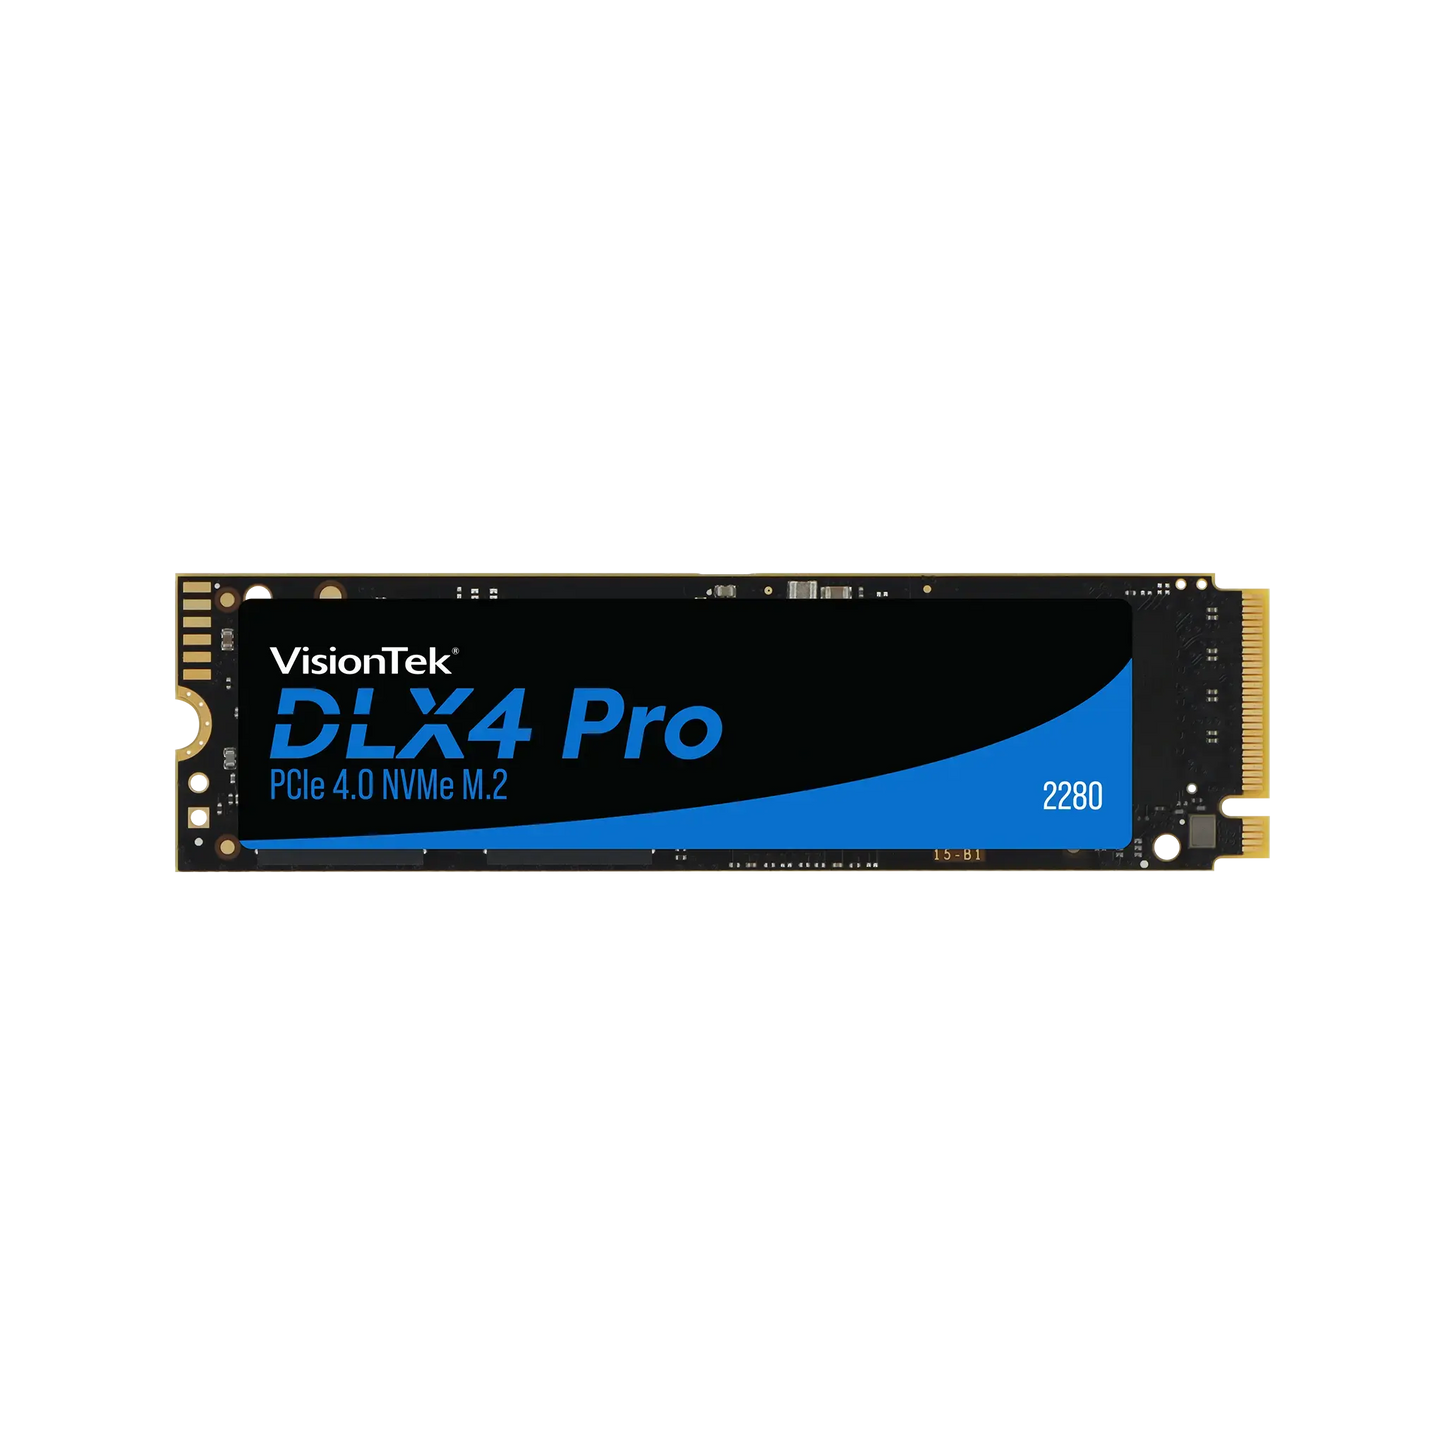 VisionTek DLX4 Pro 2280 M.2 PCIe 4.0 x4 SSD (NVMe) OPAL 2.0 SED